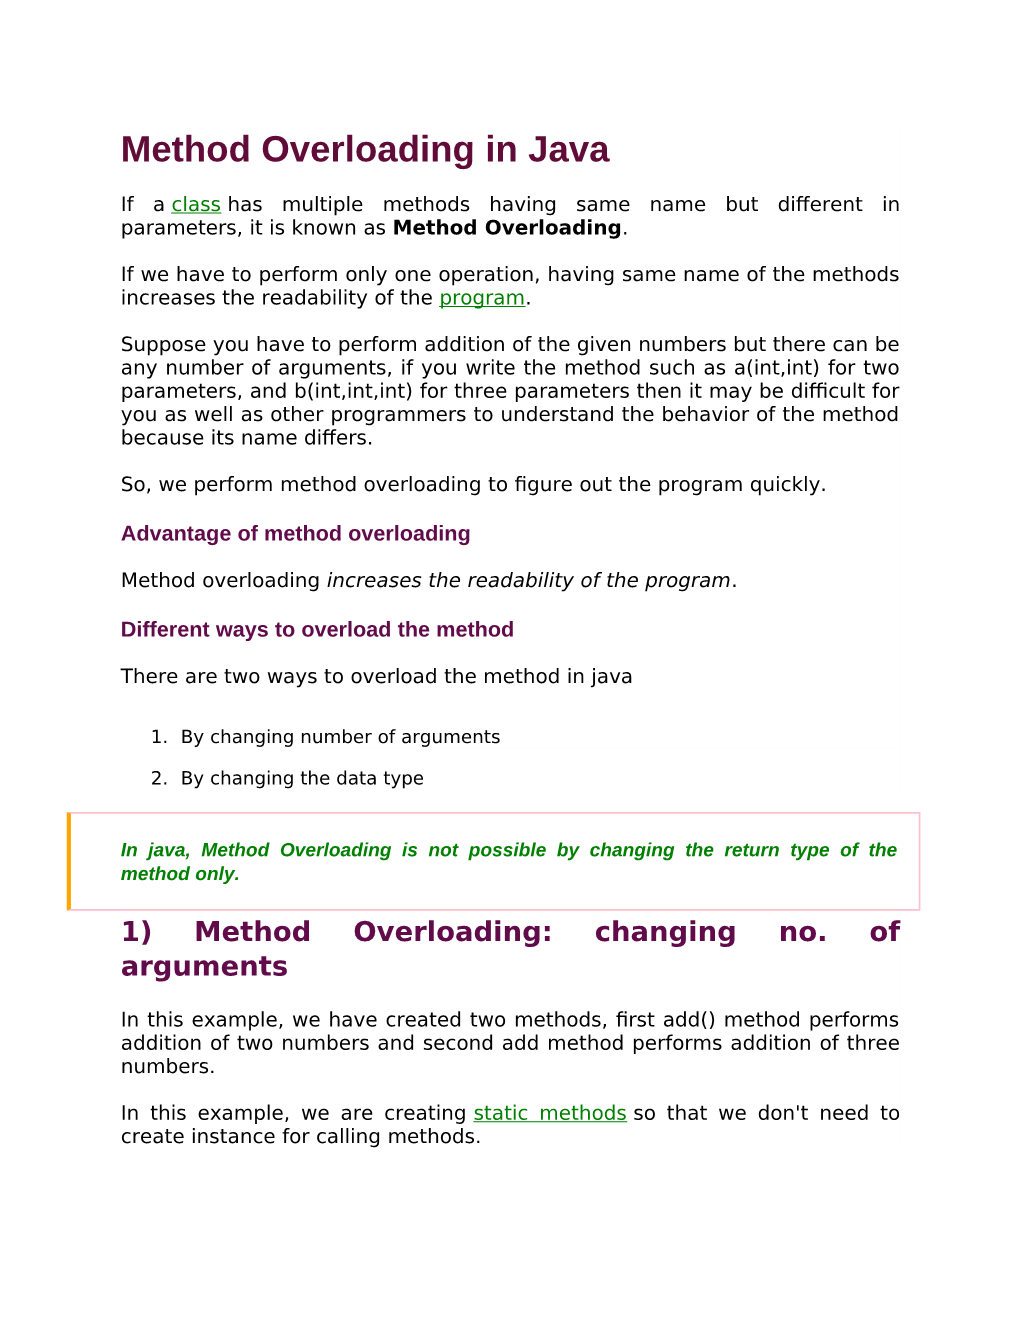 Method Overloading and Method Overriding